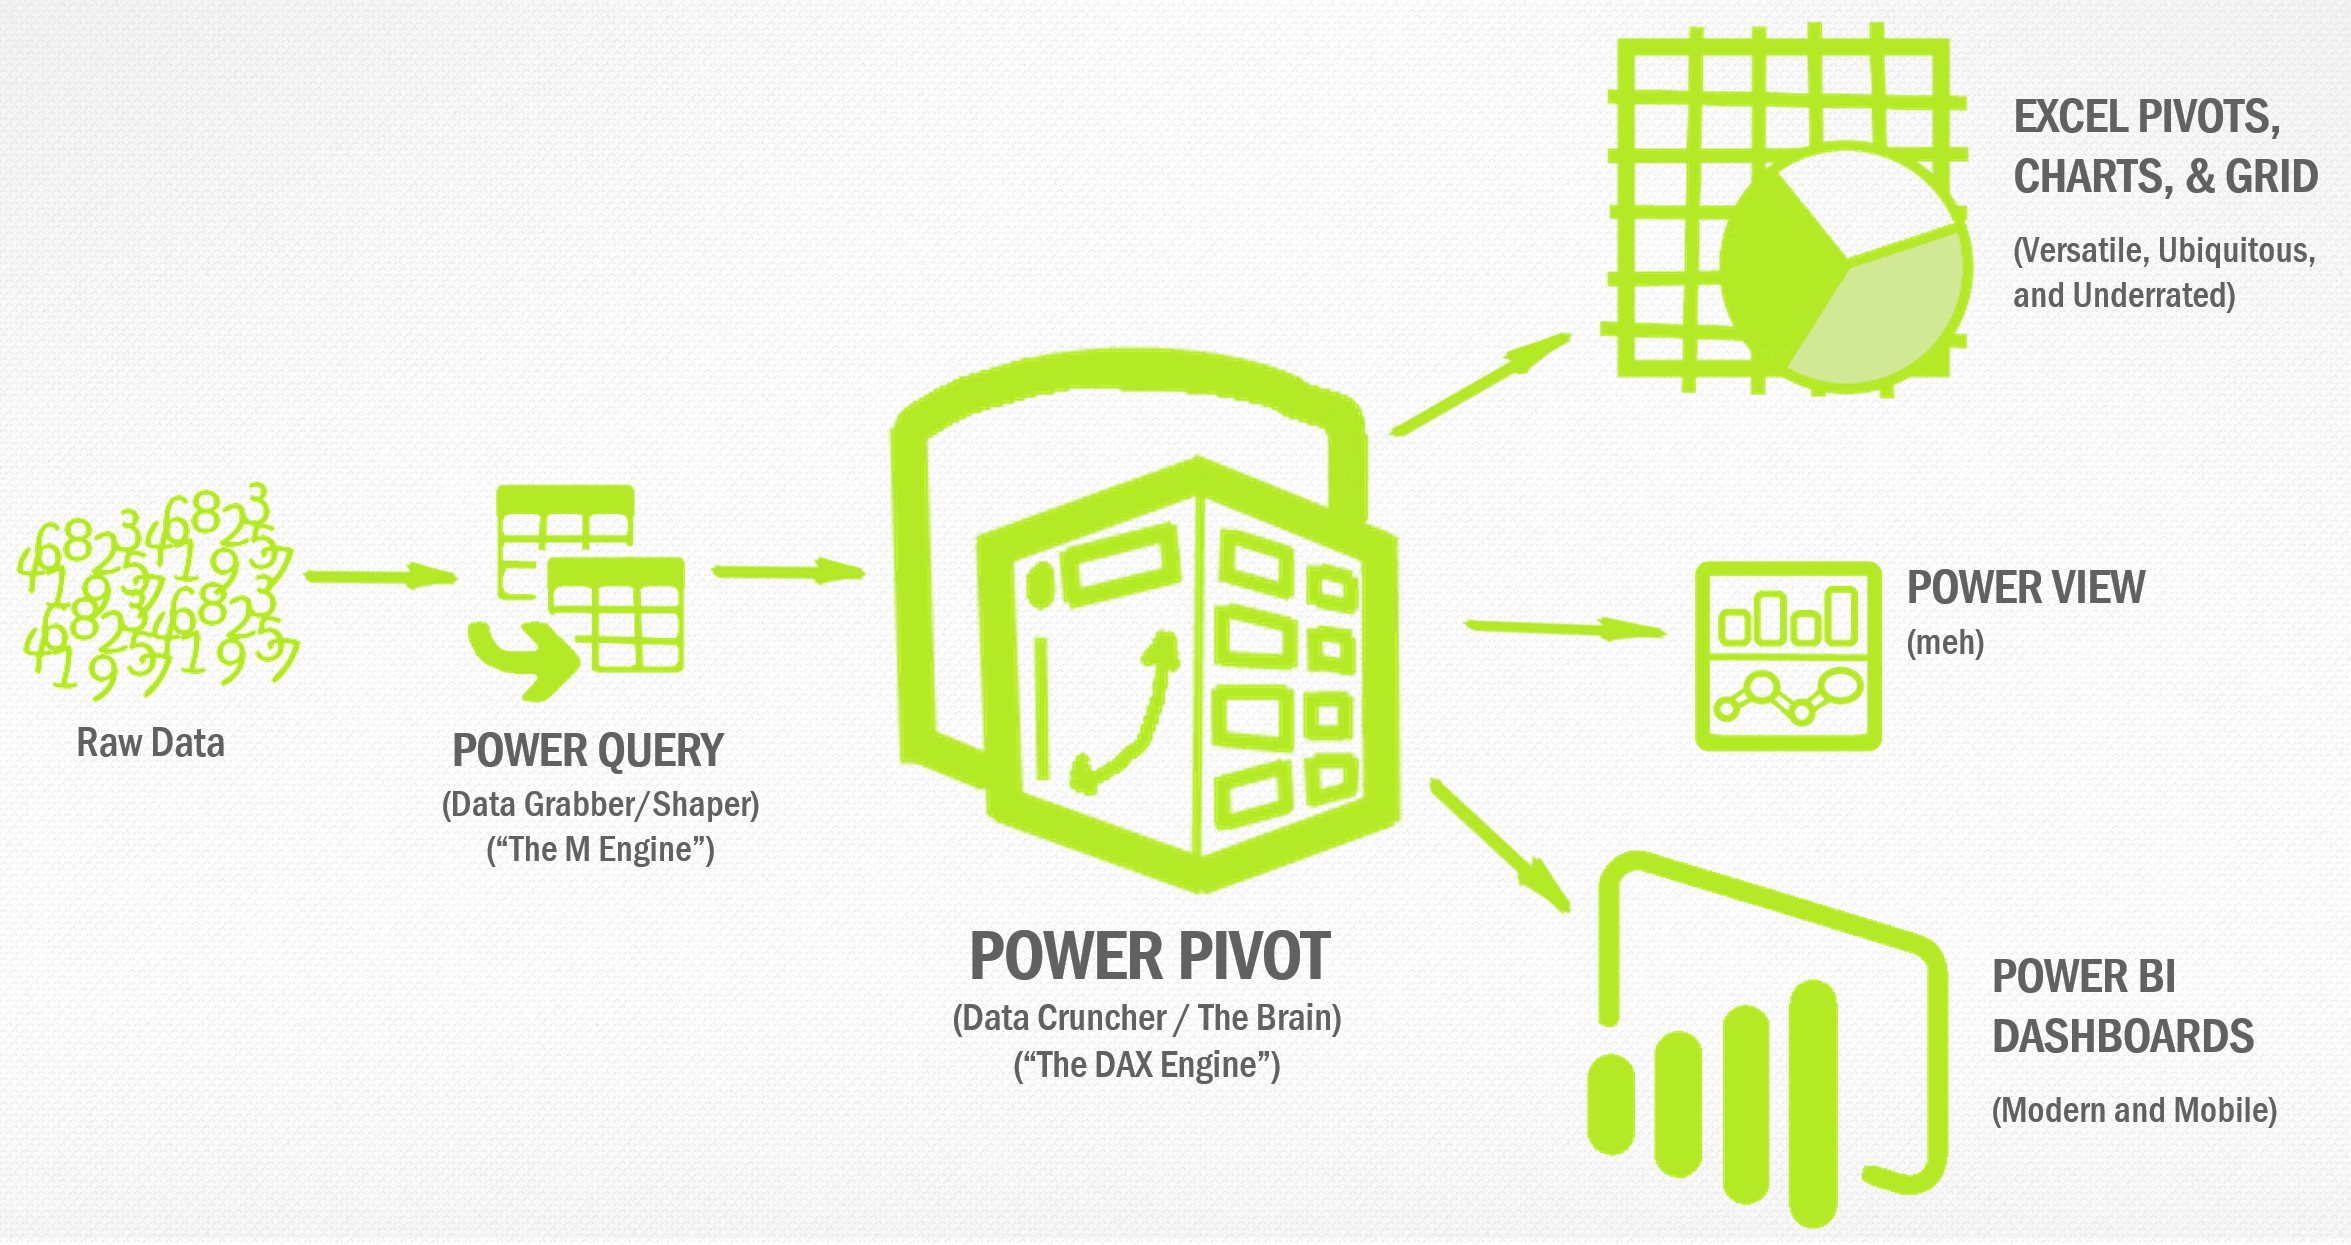 Power bi запрос. Power query. Power query и Power Pivot. Эксель query. POWERQUERY И powerpivot.